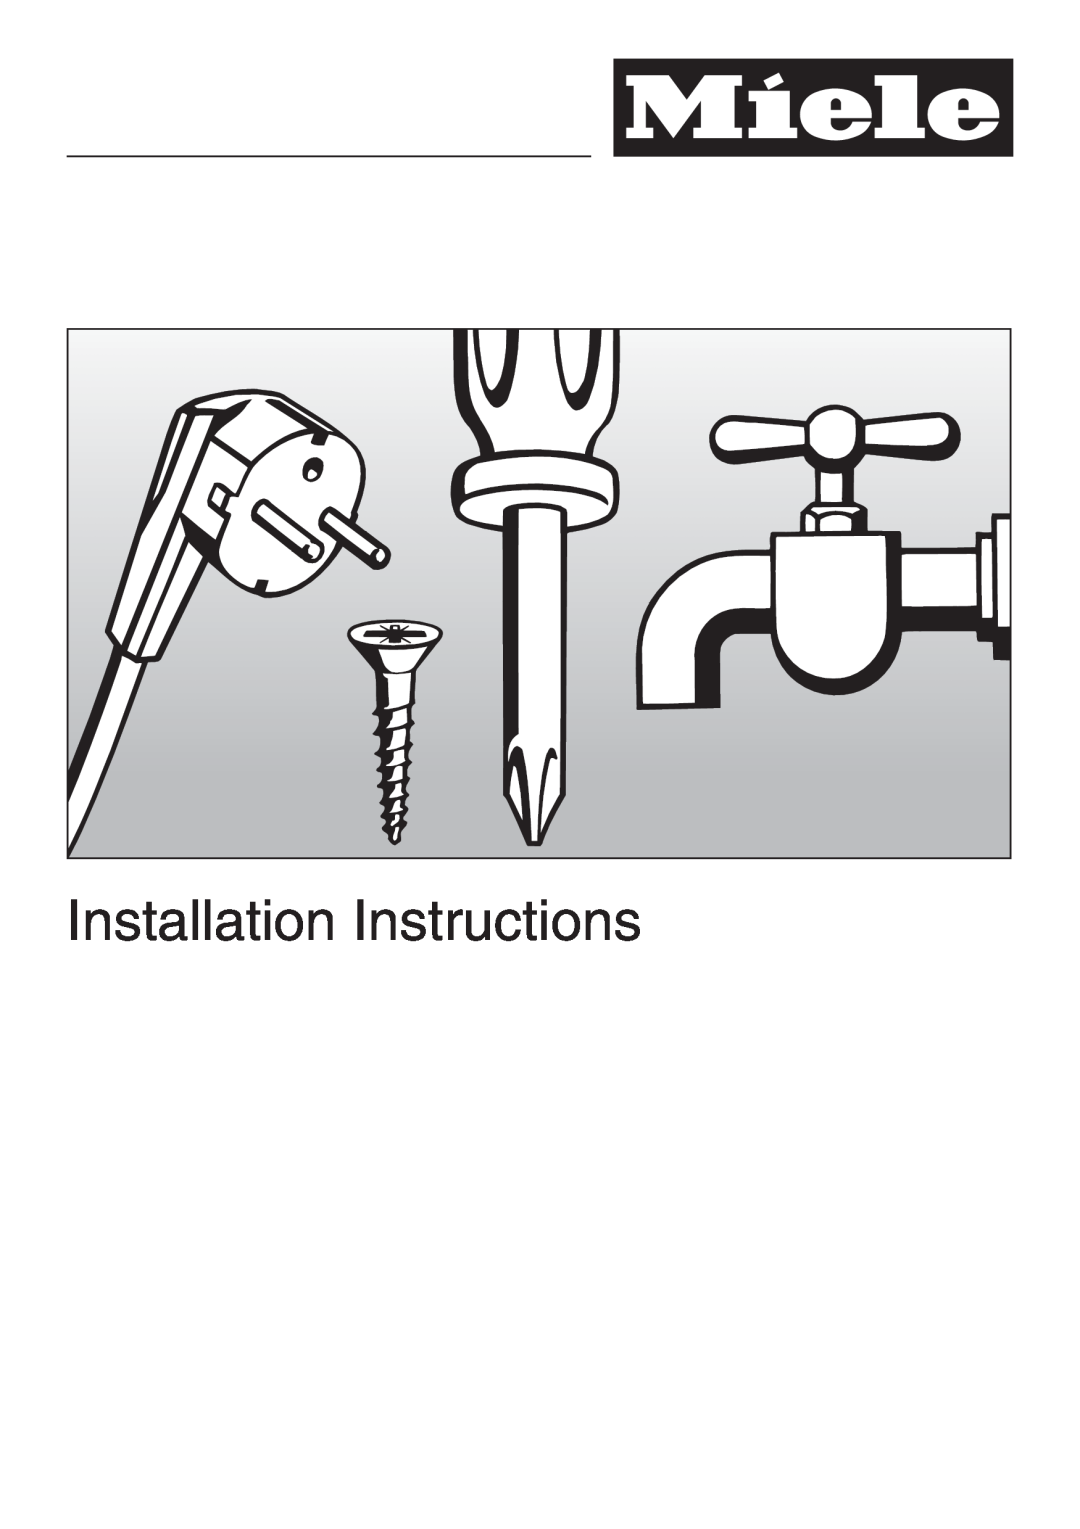 Miele DA2280, DA2210 installation instructions Installation Instructions 